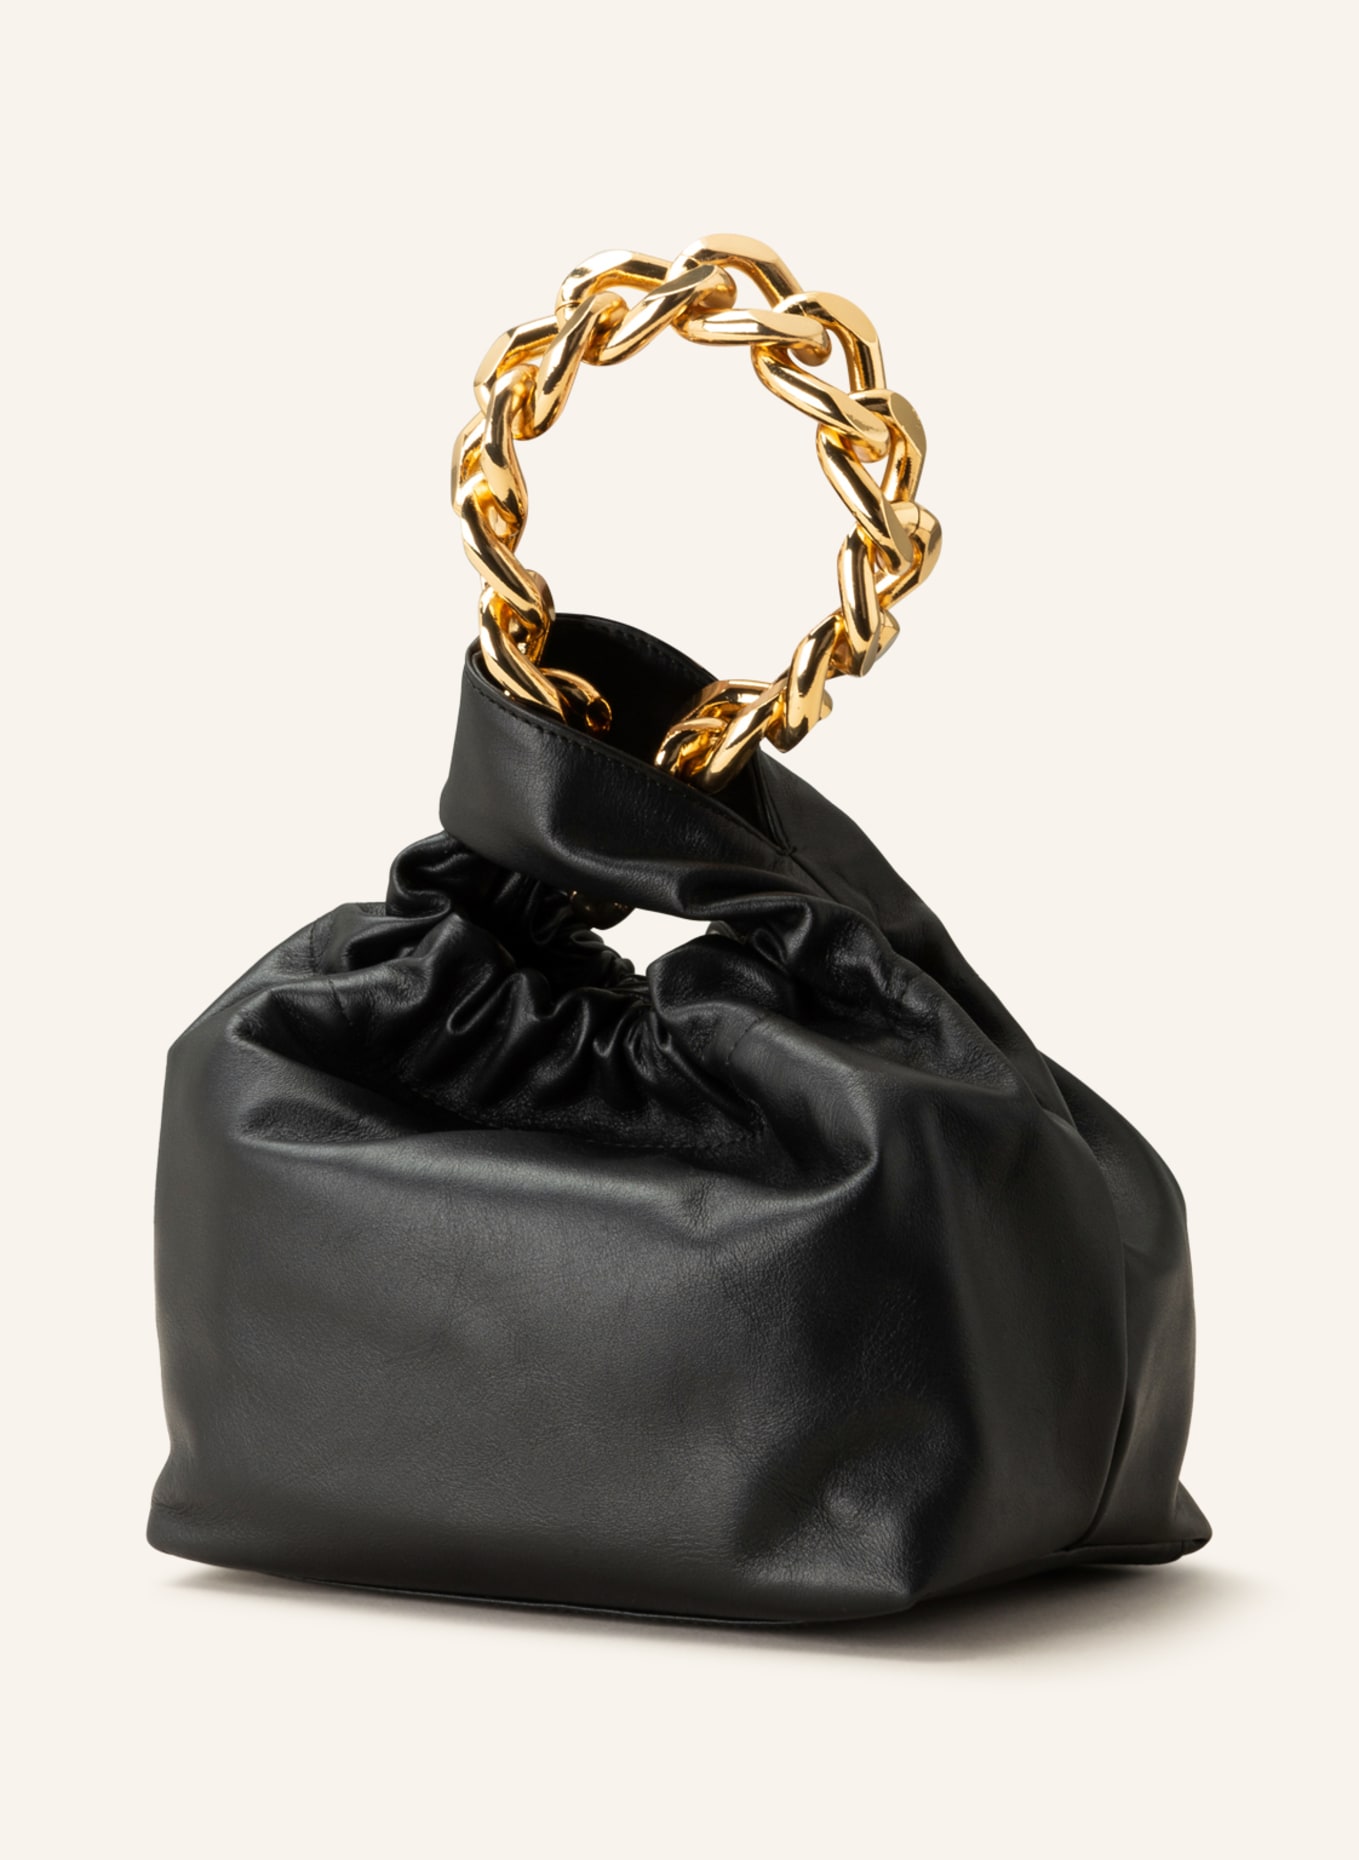 DeMellier Santa Monica Metallic Chain Top-Handle Bag